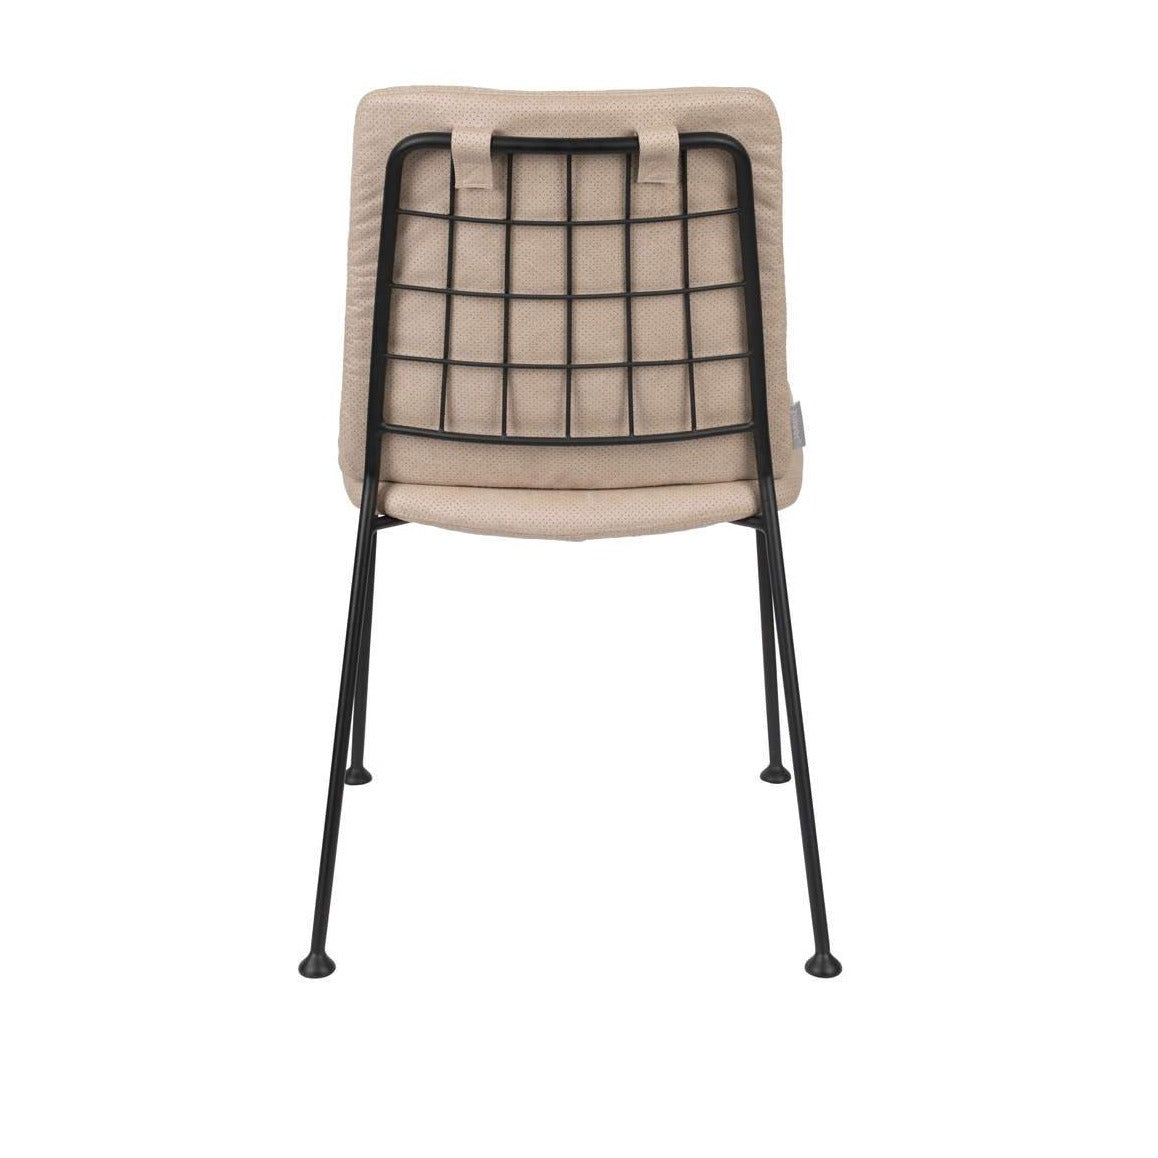 FAB chair beige, Zuiver, Eye on Design